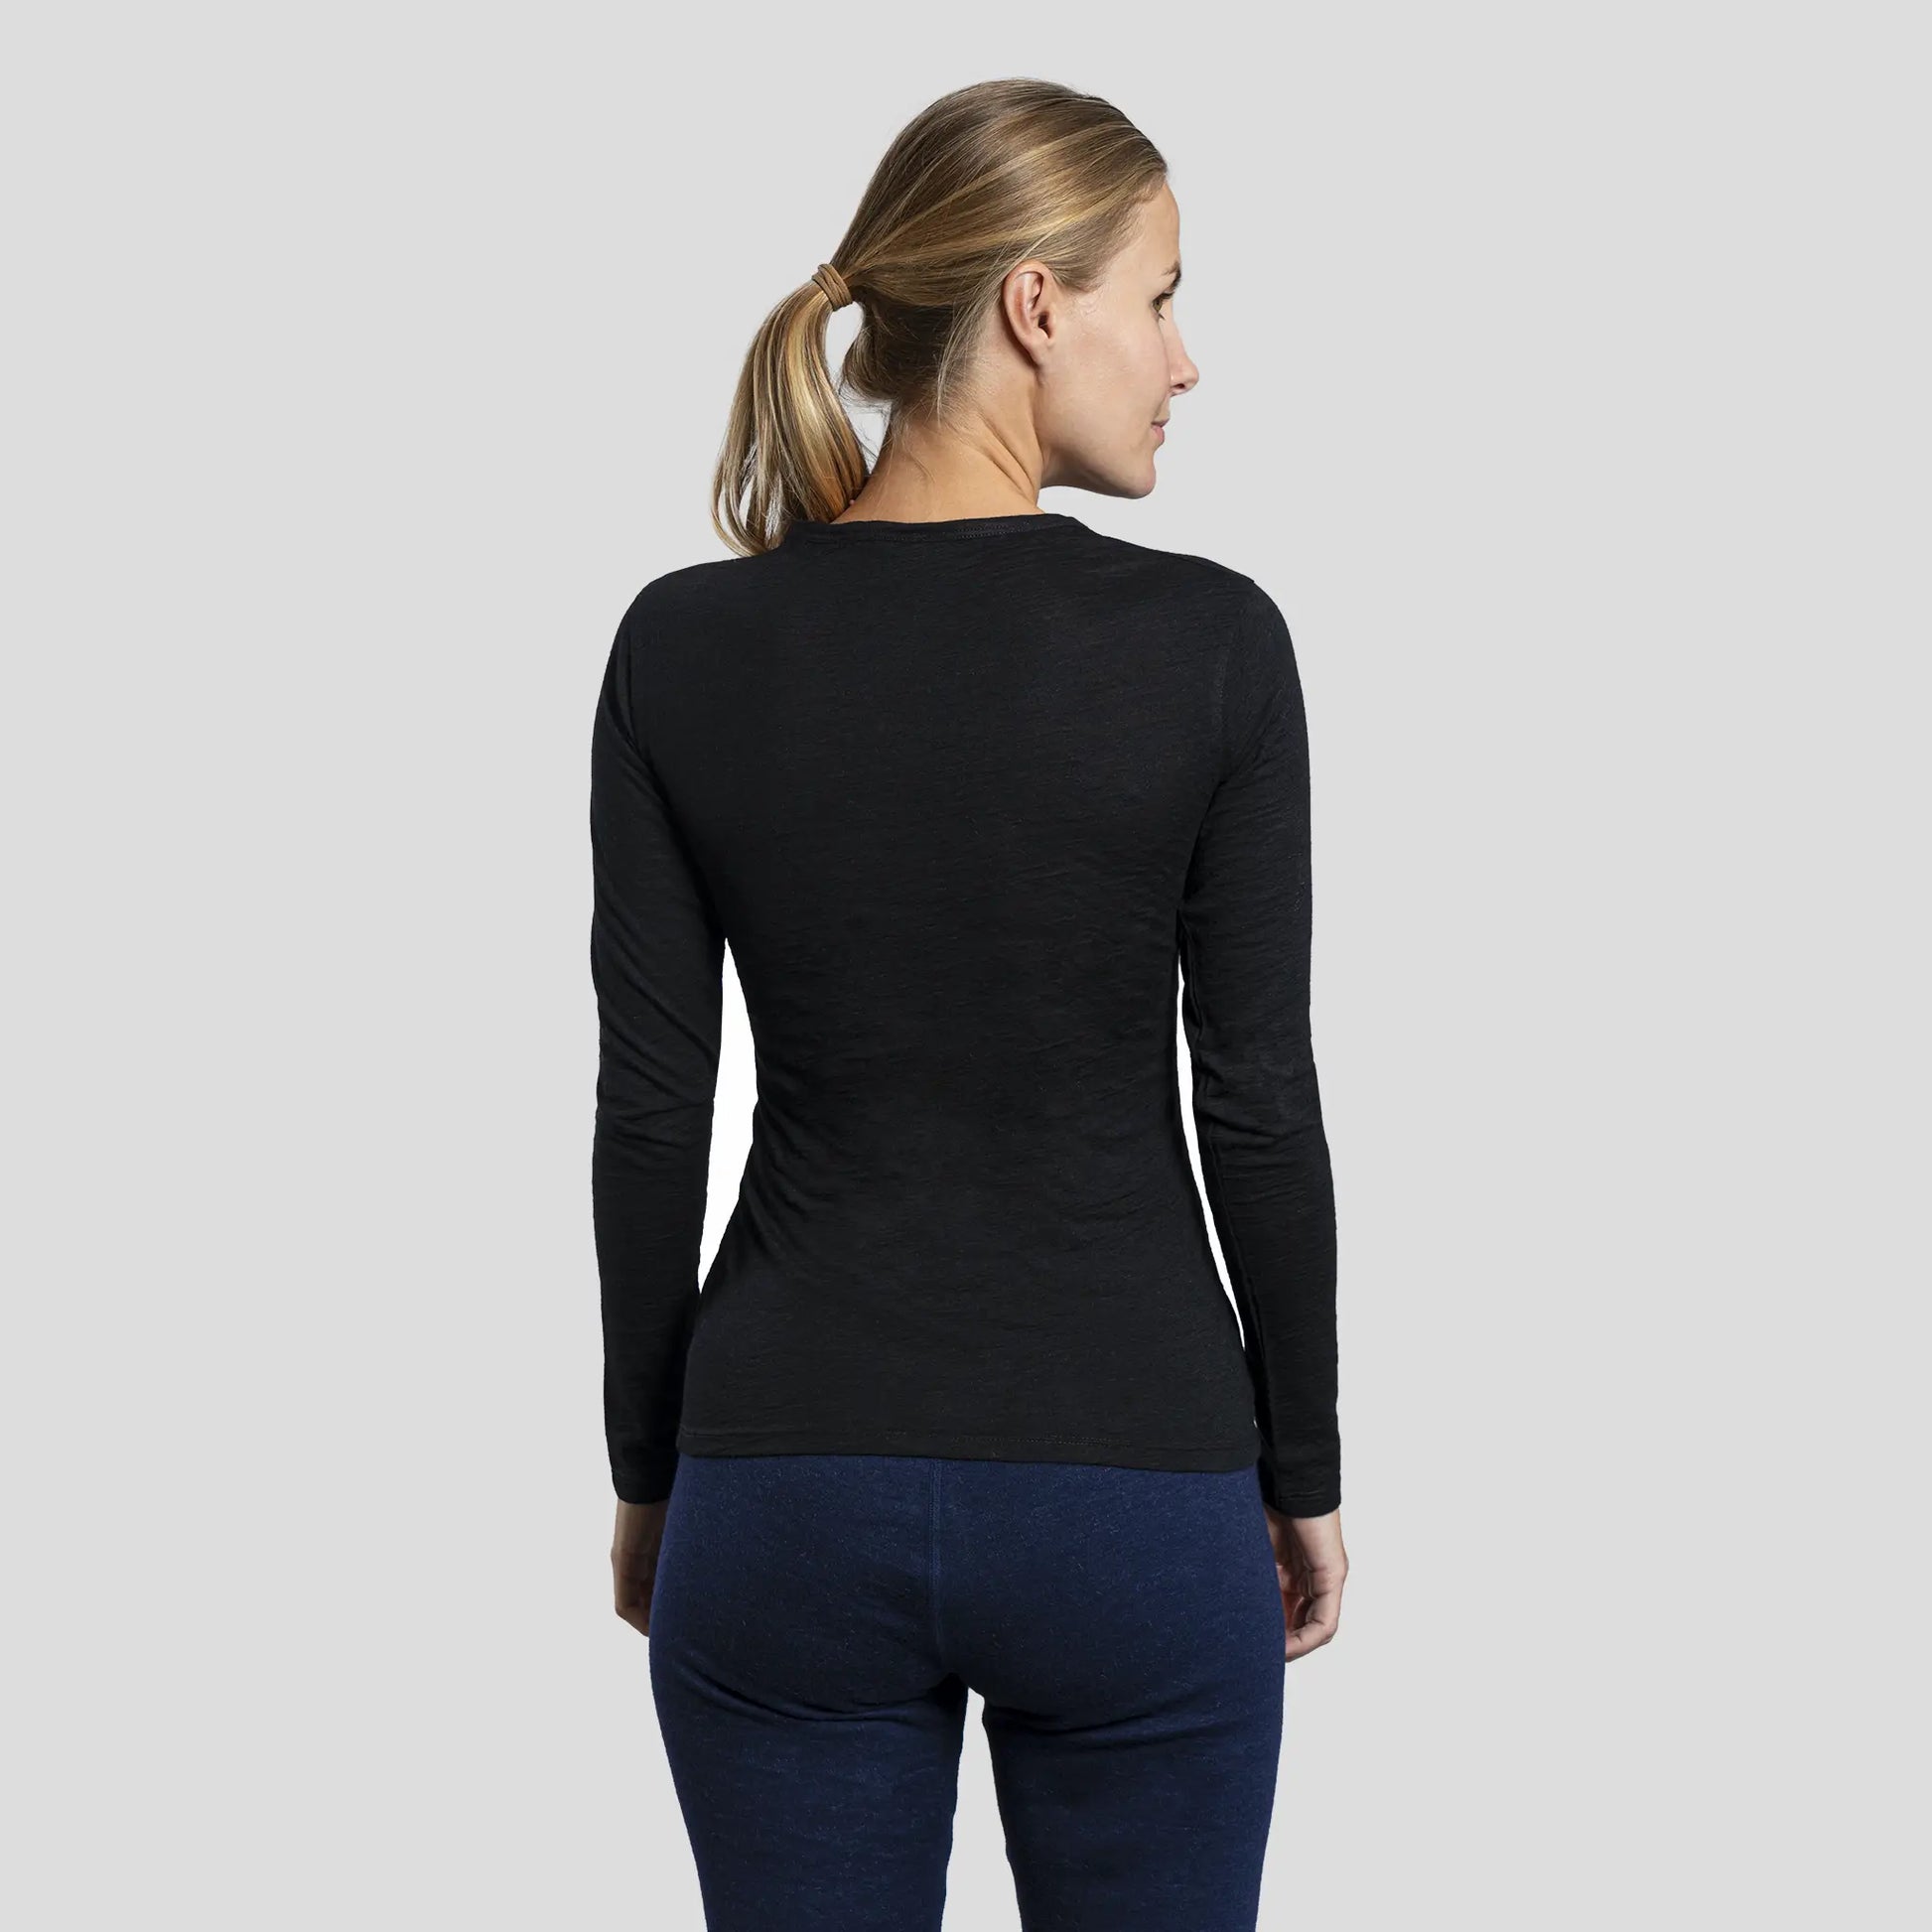 womens high performance long sleeve shirt color black